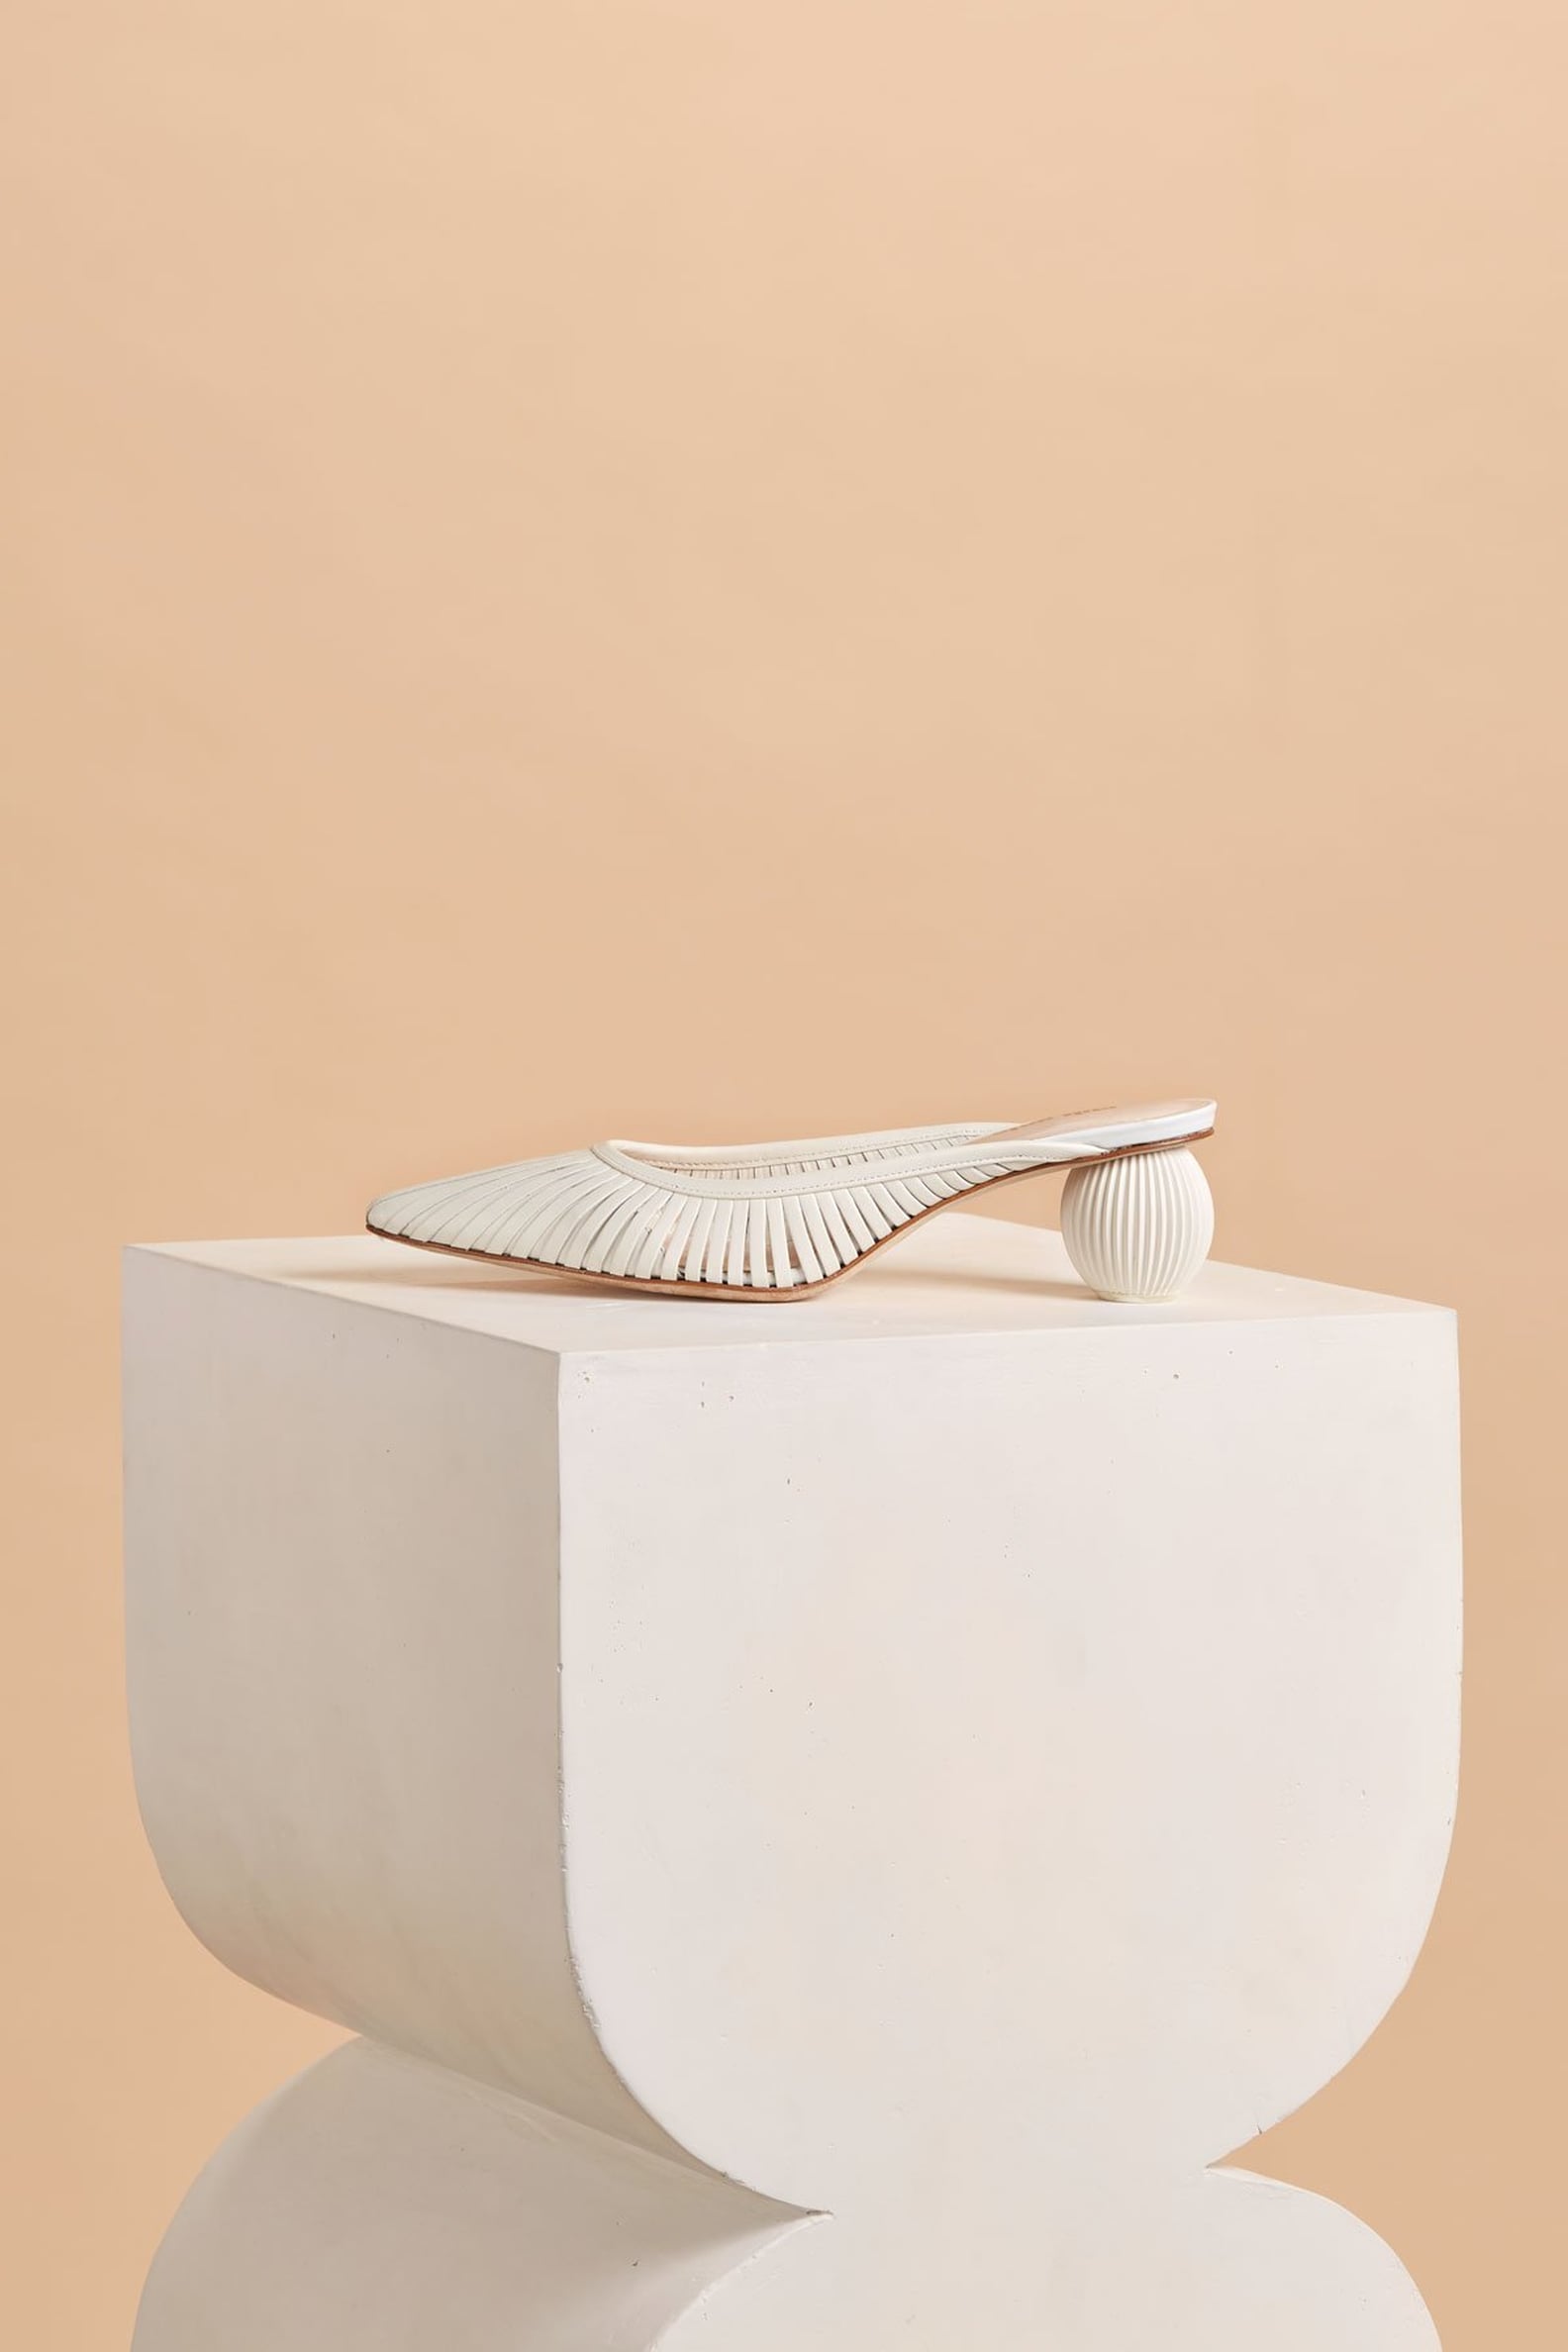 Emily Ratajkowski's Sexy Shoes | POPSUGAR Fashion